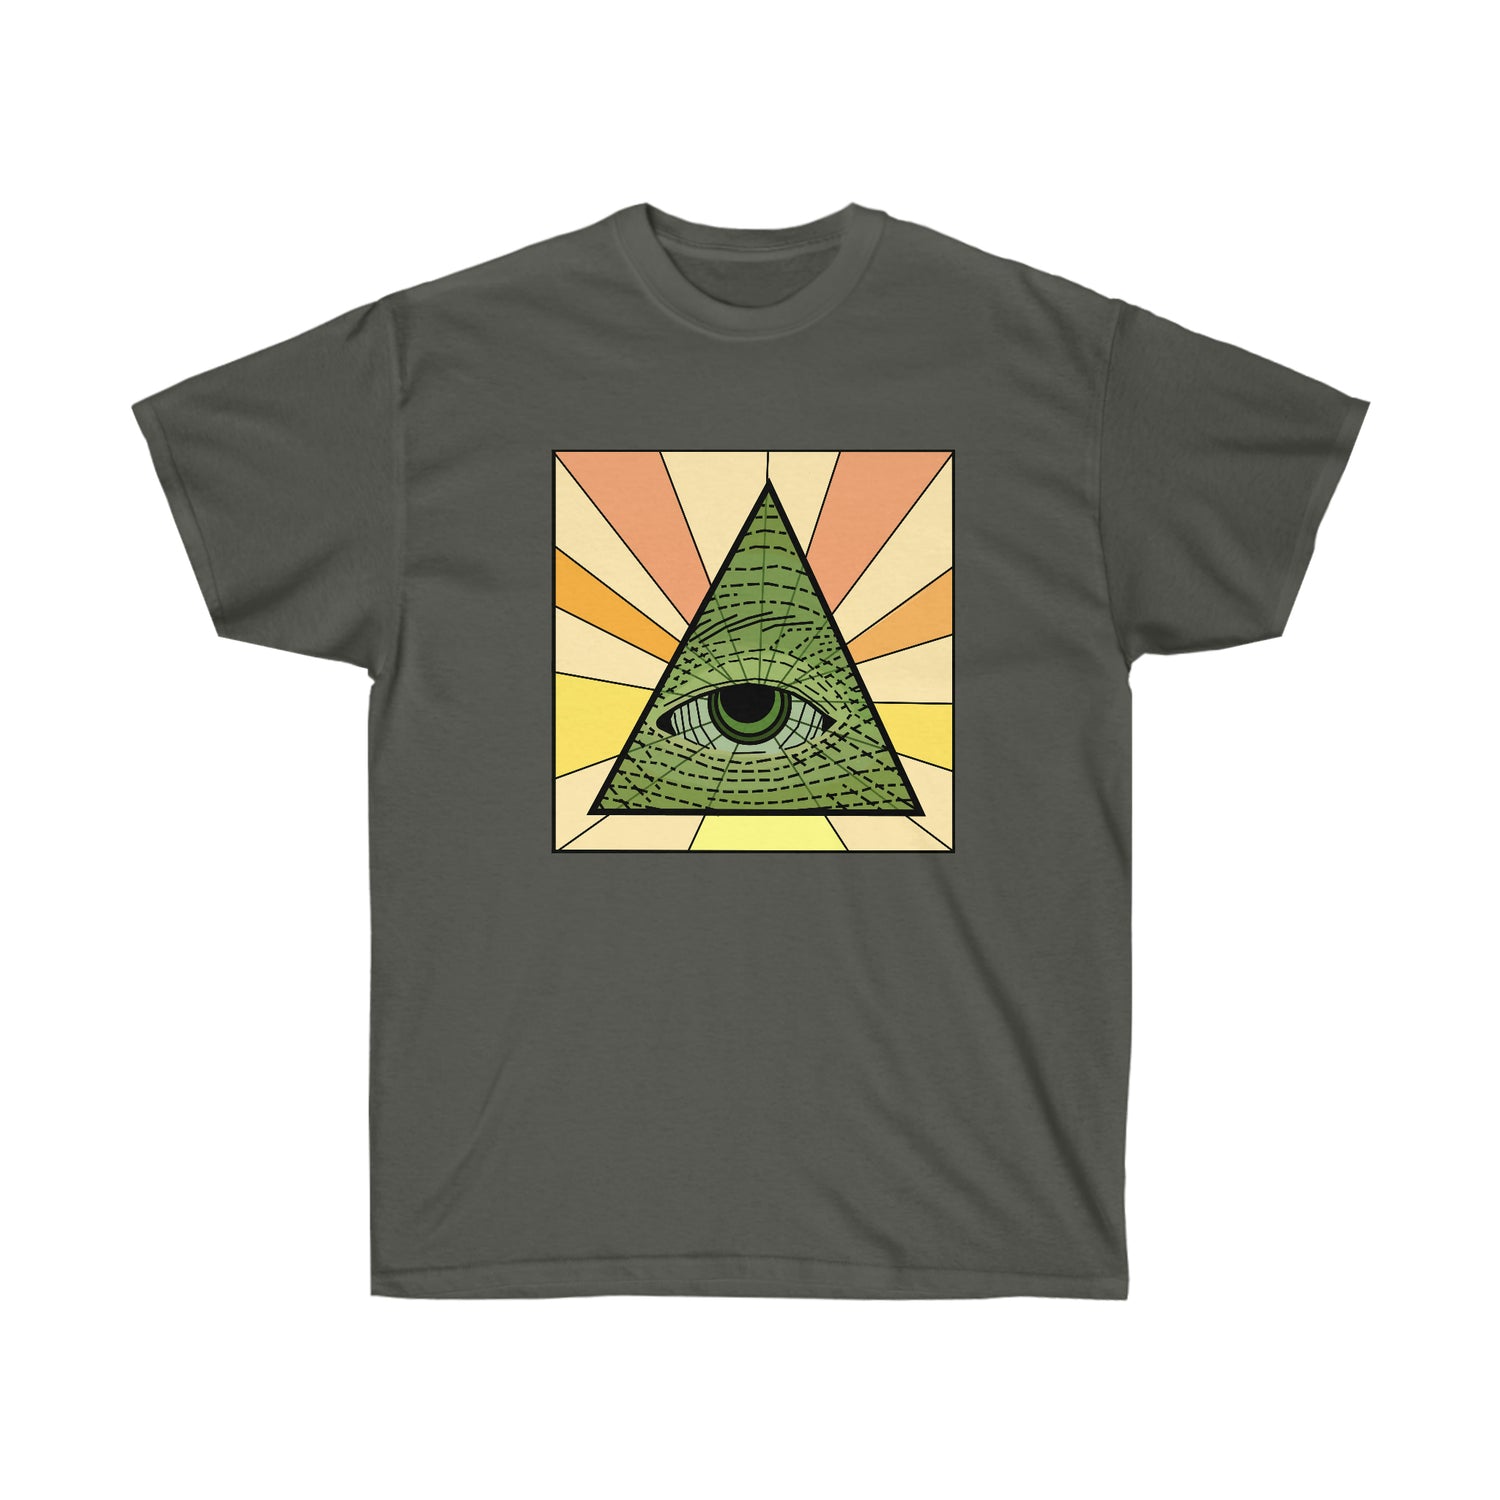 Eye See You Illuminati All Seeing Eye Punk Shirt Lord and Lady Towers